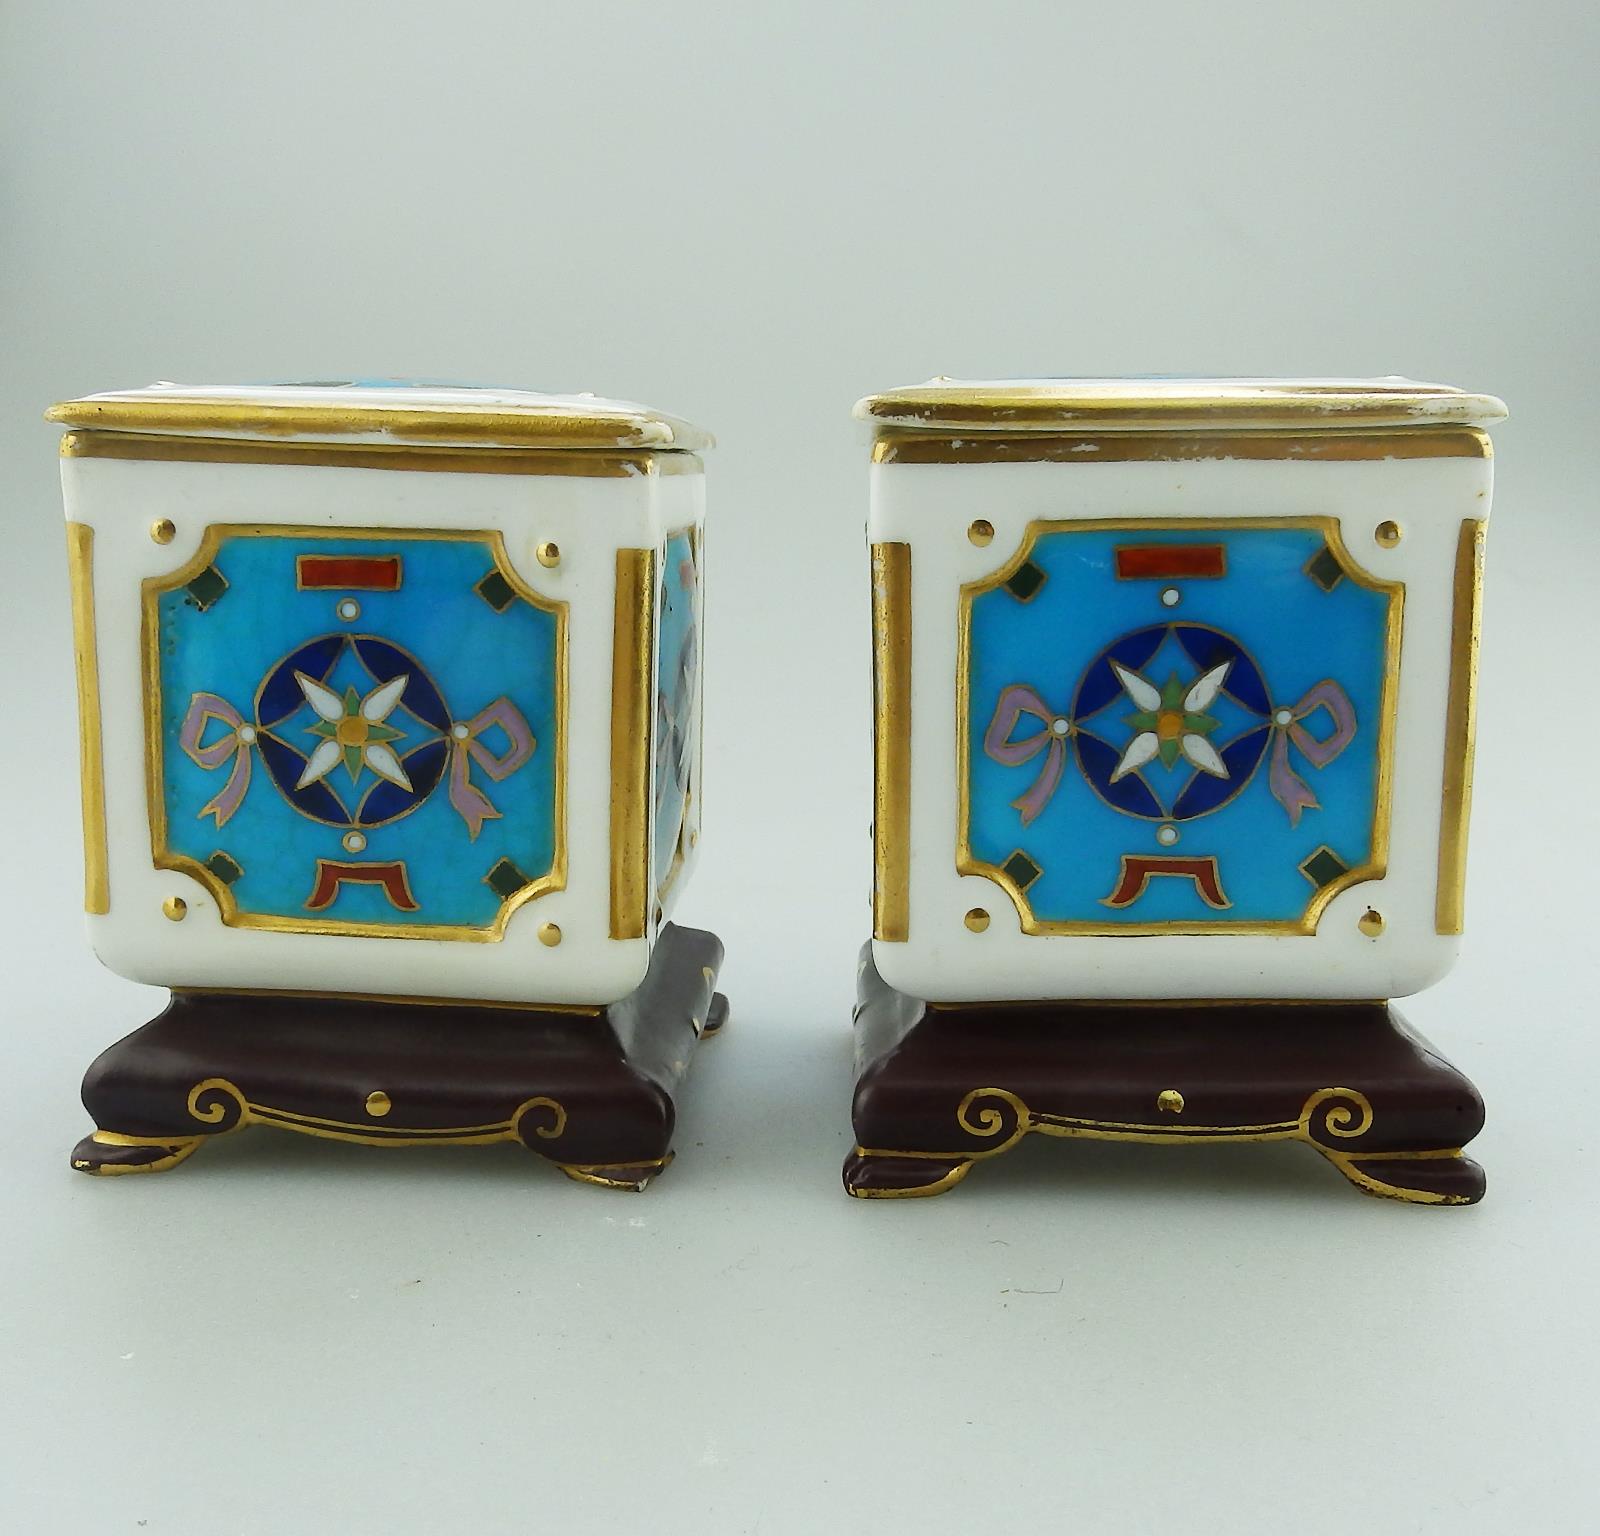 A pair of Minton porcelain miniature Boxes designed by Christopher Dresser 19thC